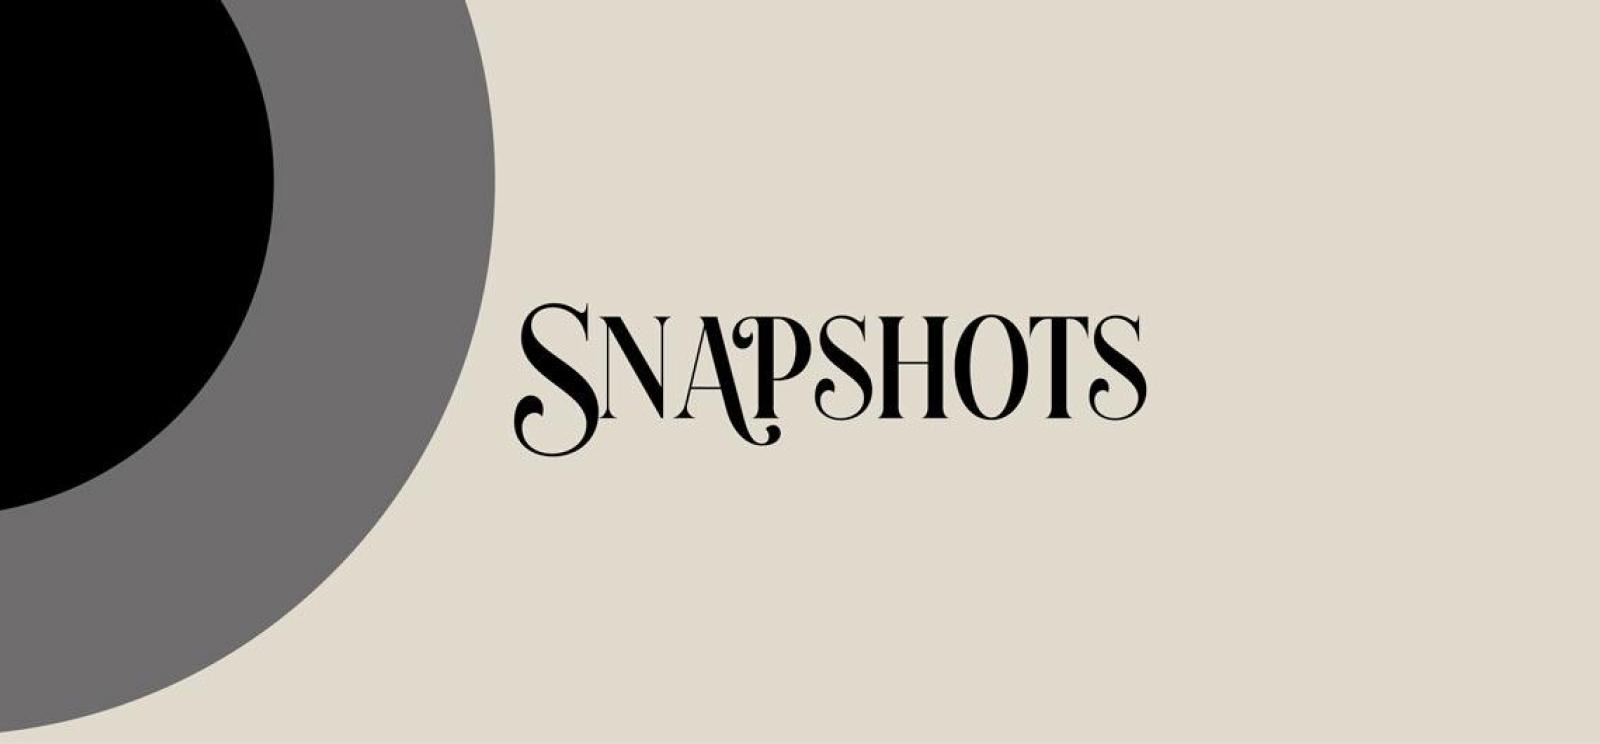 Snapshots exhibition logo